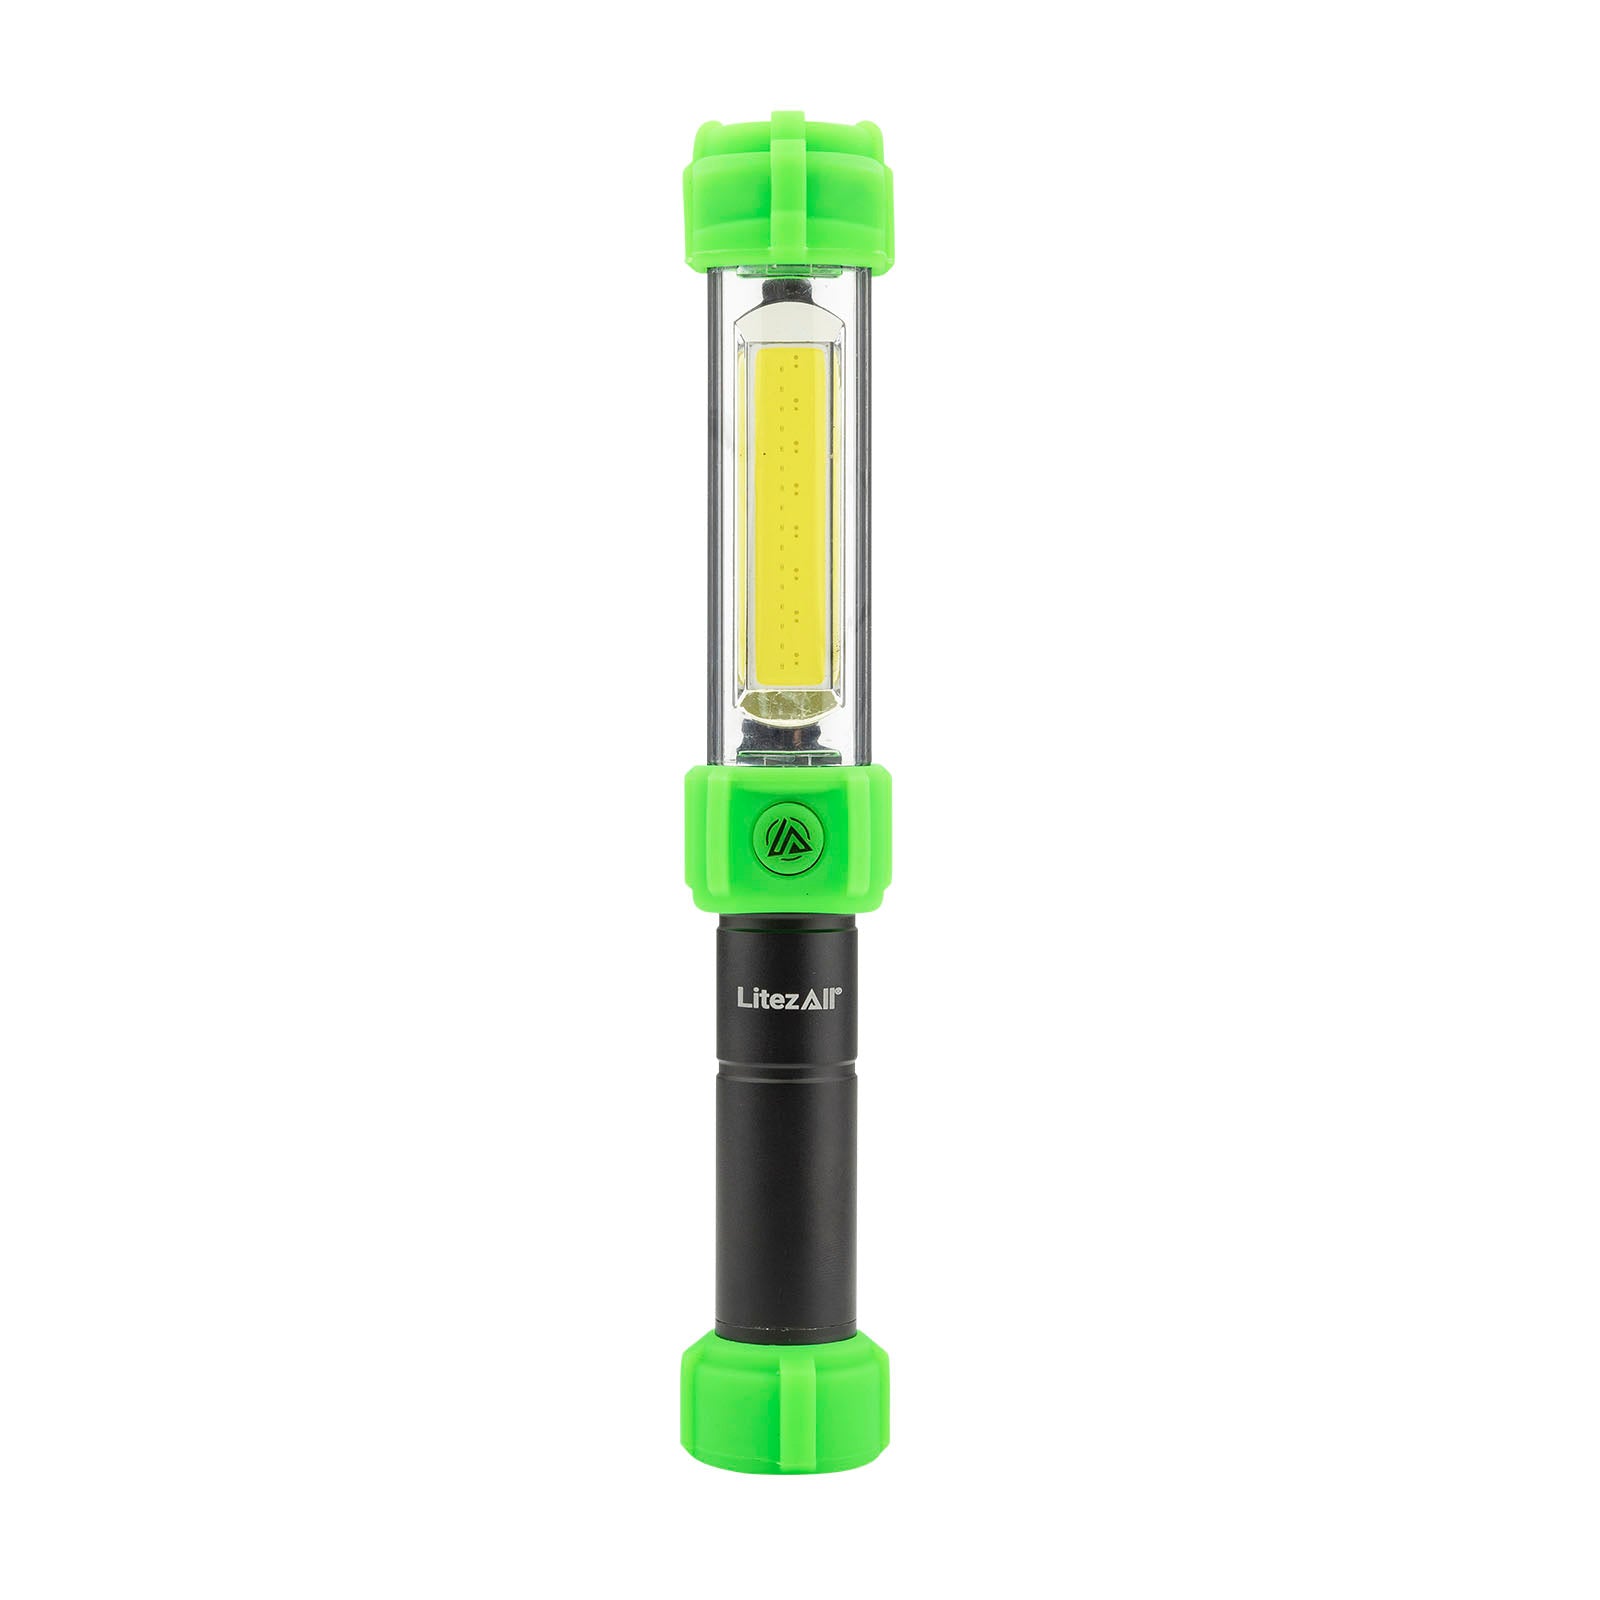 LitezAll Nearly Invincible Jumbo Pen Light - LitezAll - Pen Lights - 25